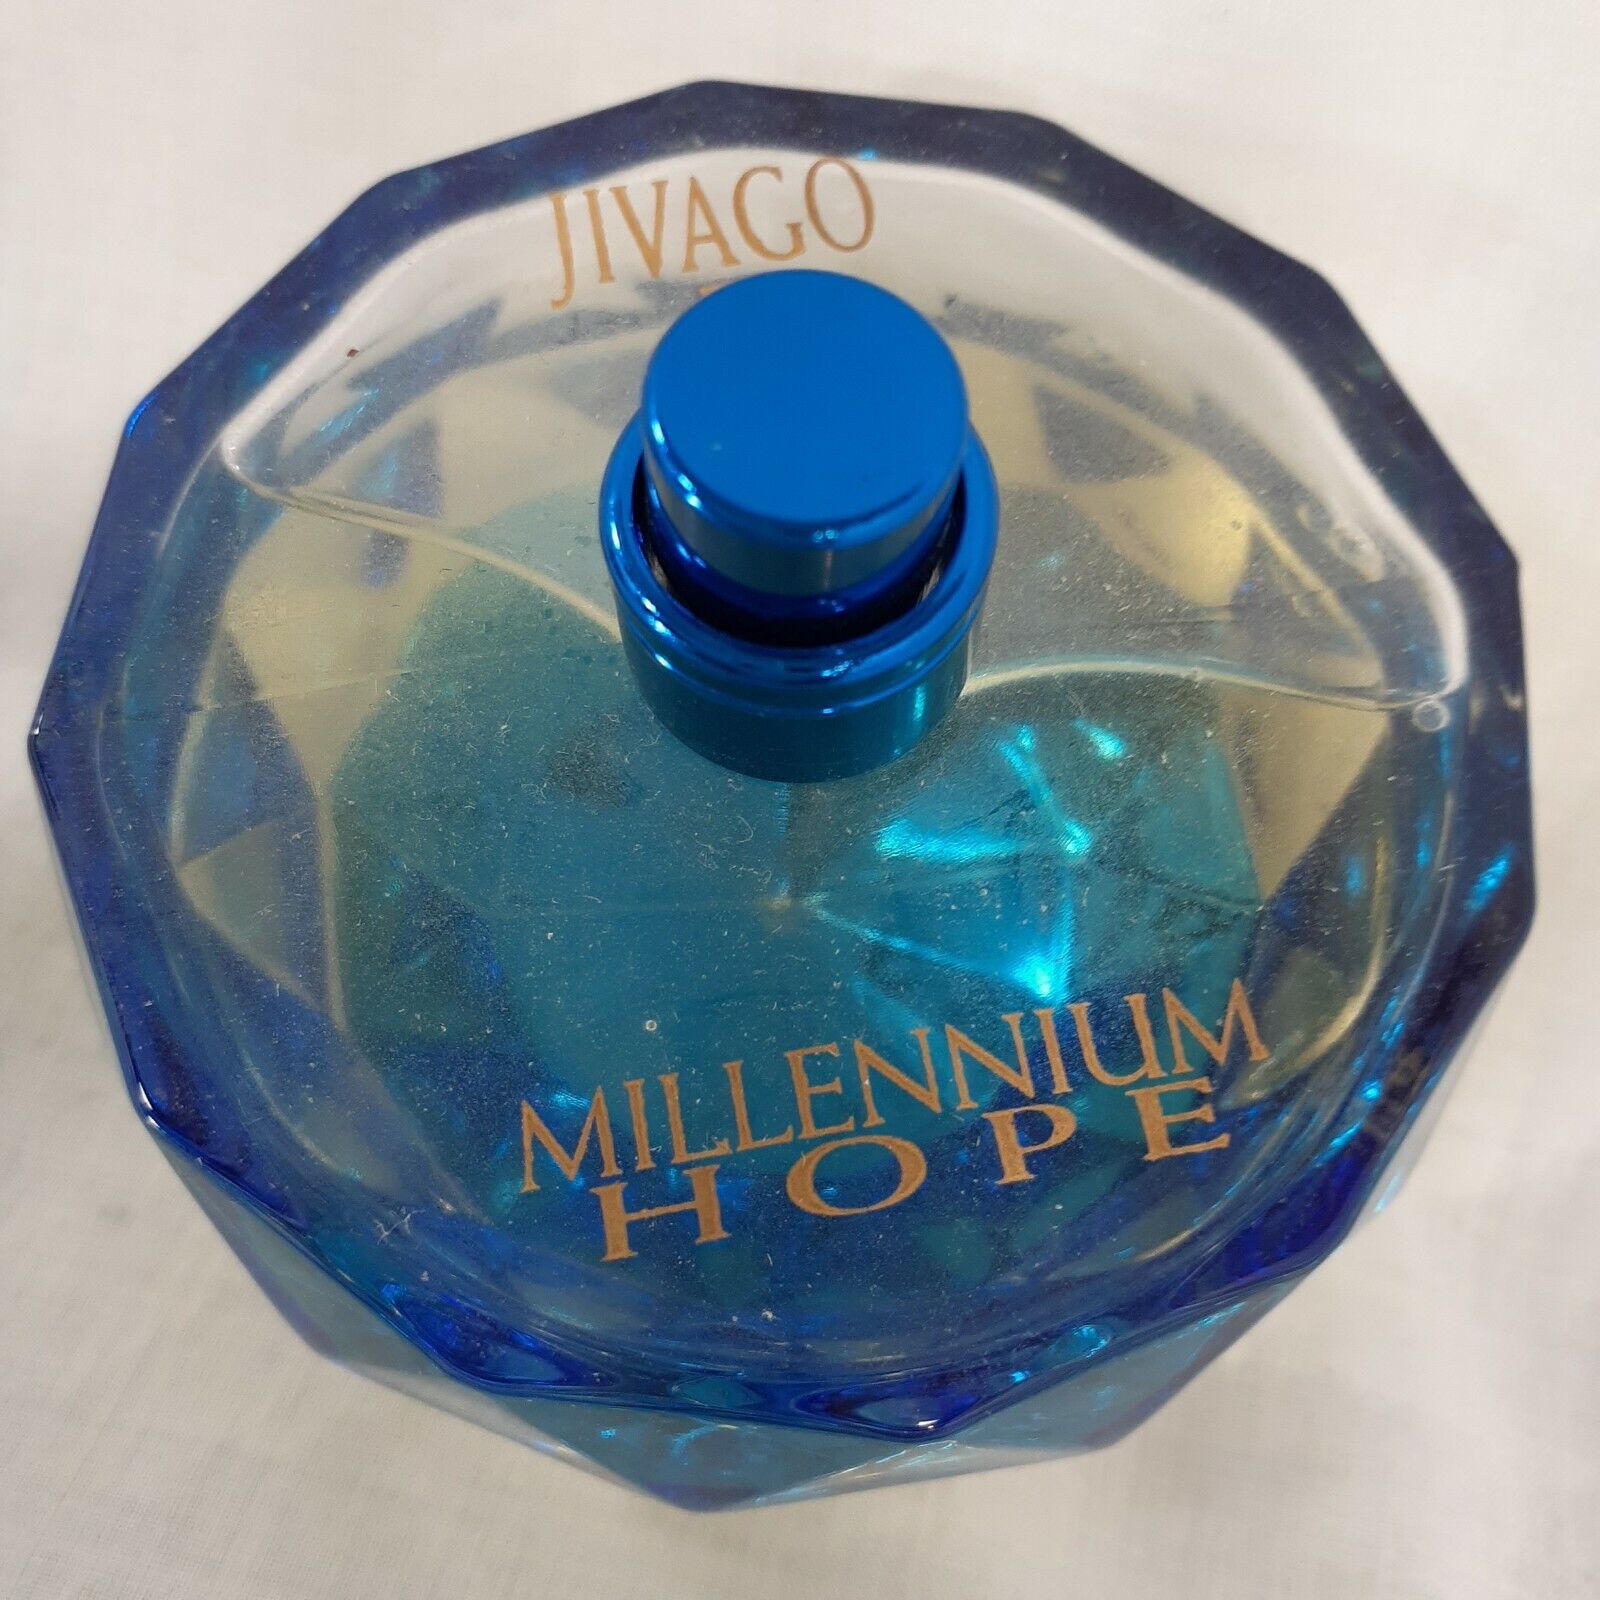 Vintage Jivago Millennium Hope 4.2 oz. Women\'s Fragrance Spray No Box 98% Full